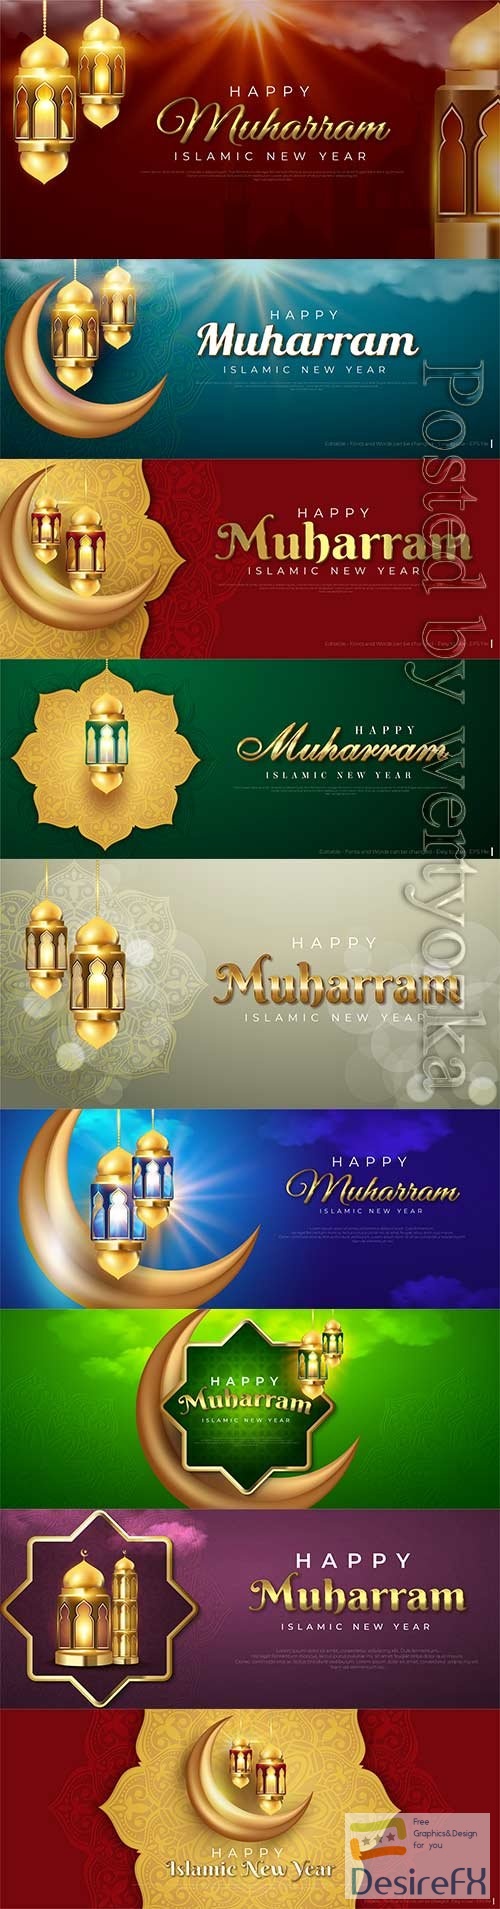 Islamic new year happy muharram celebration banner with islamic golden lantern